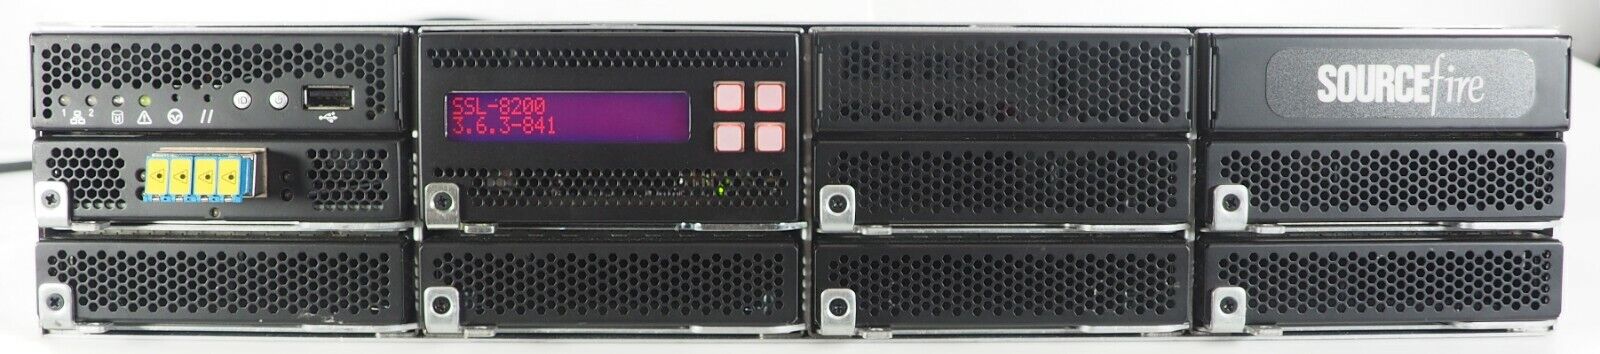 Cisco SourceFire SSL-8200 CHAS-2U-AC/DC System Appliance with 200GB SSD 